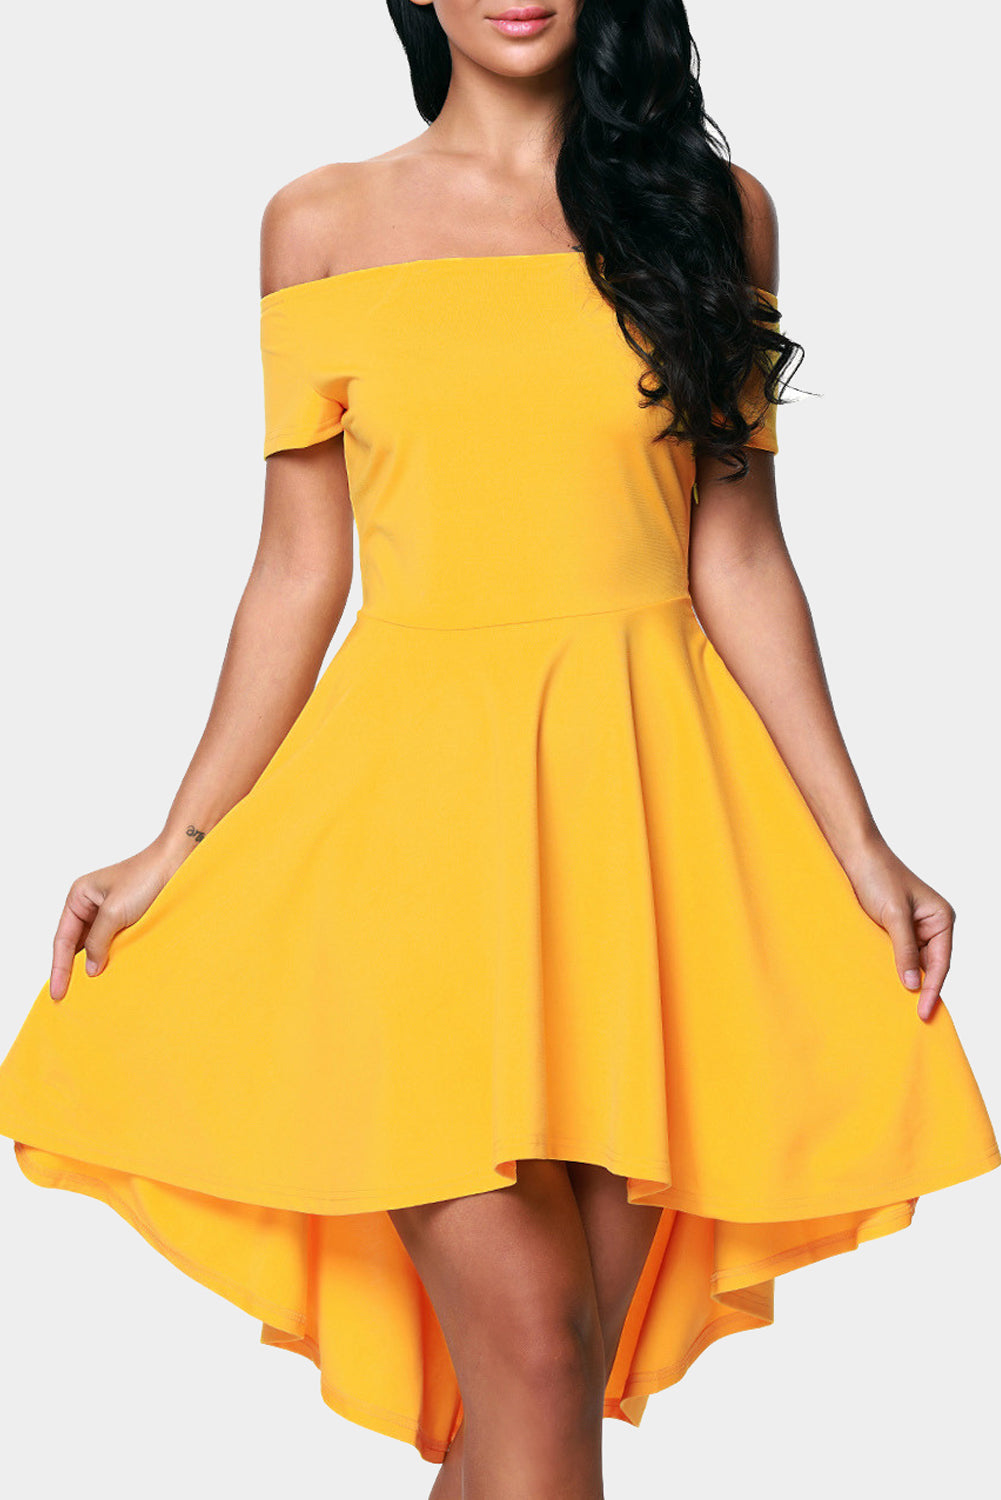 All The Rage Yellow Skater Dress For Sale - Fashion Clothing | Upskalez